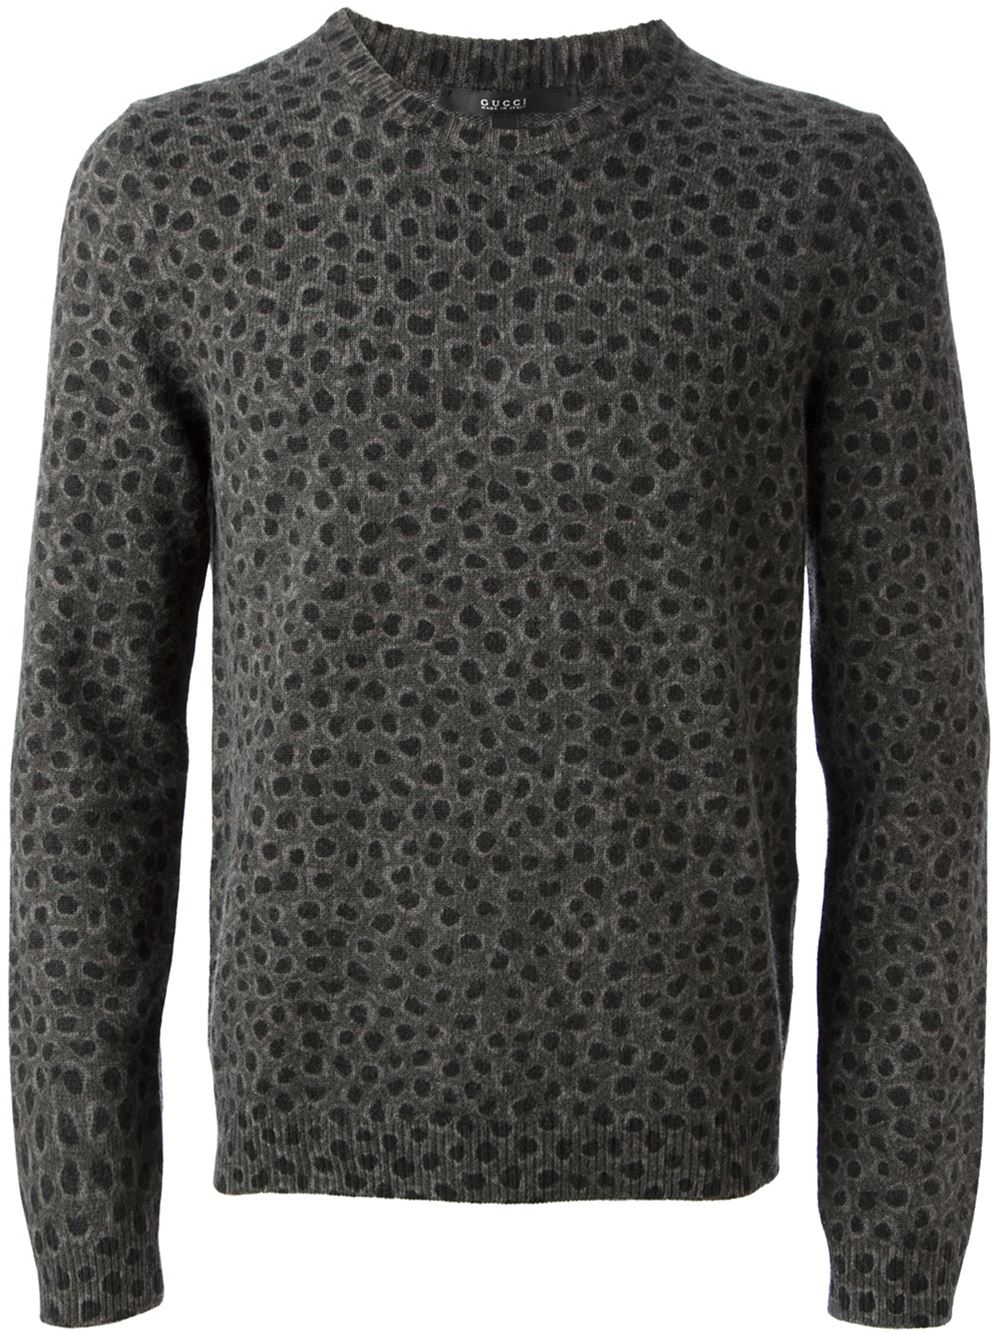 Lyst - Gucci Leopard Print Jumper in Gray for Men